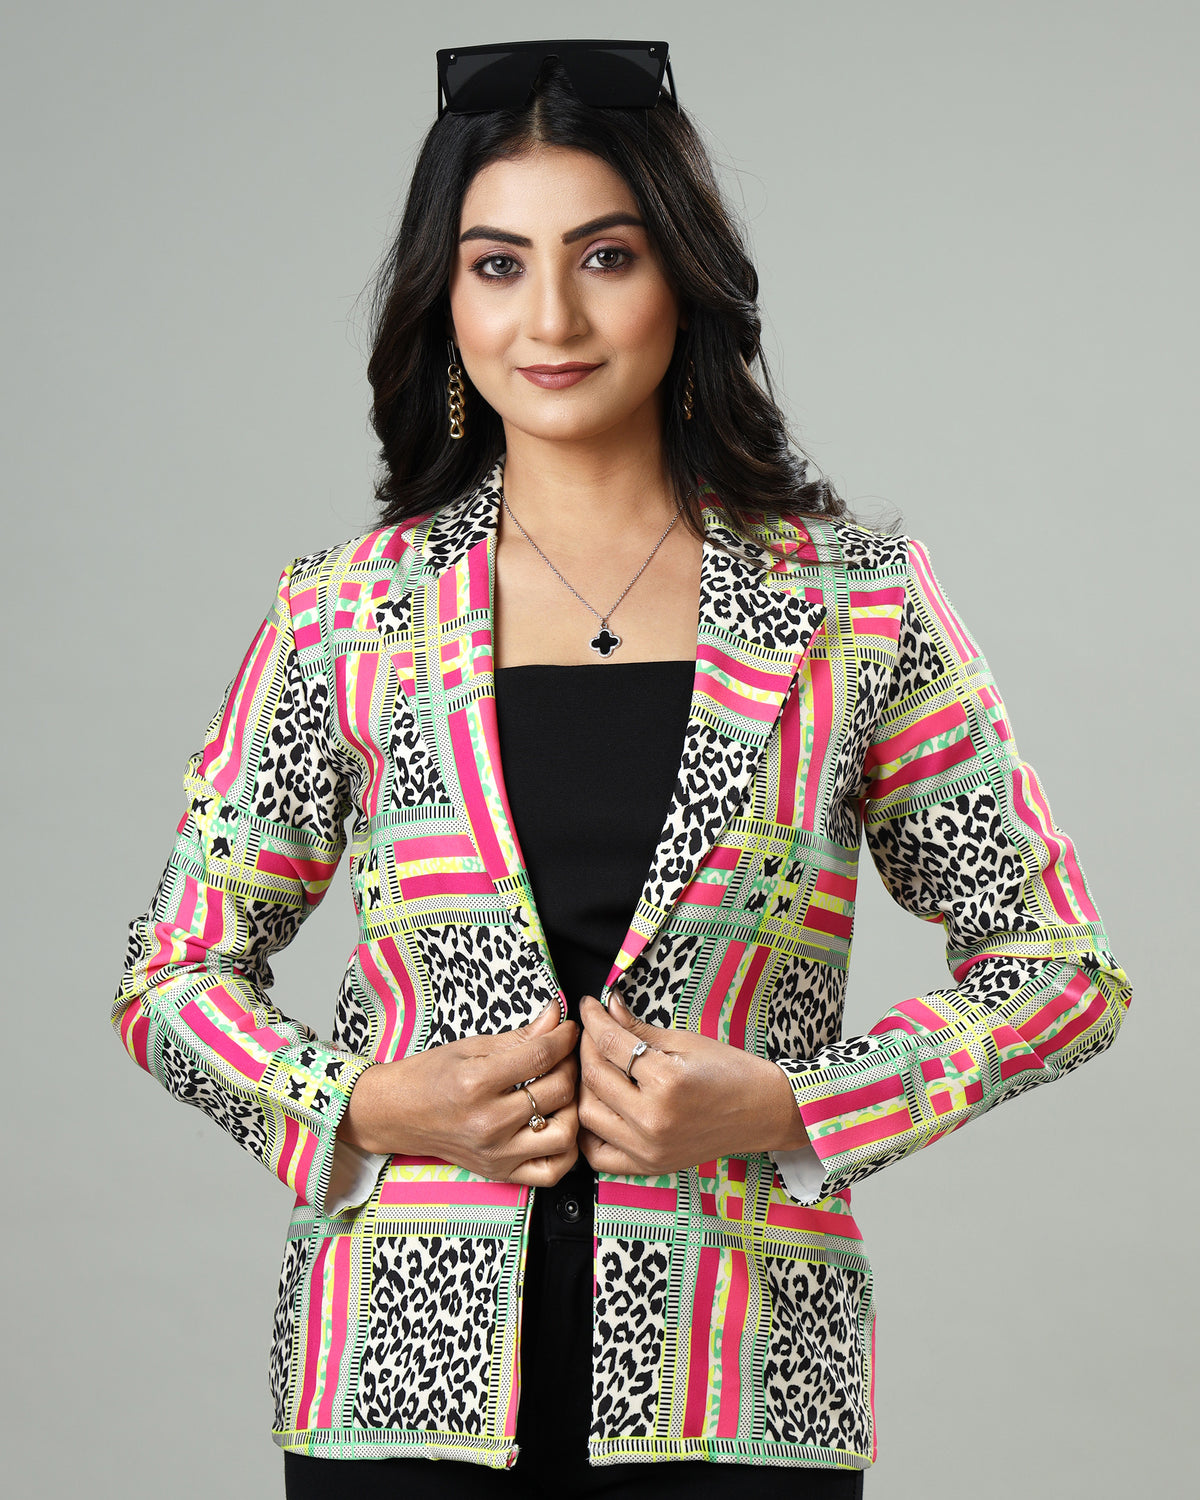 Luxe Layers: Women's Leopard Checks Print Jacket